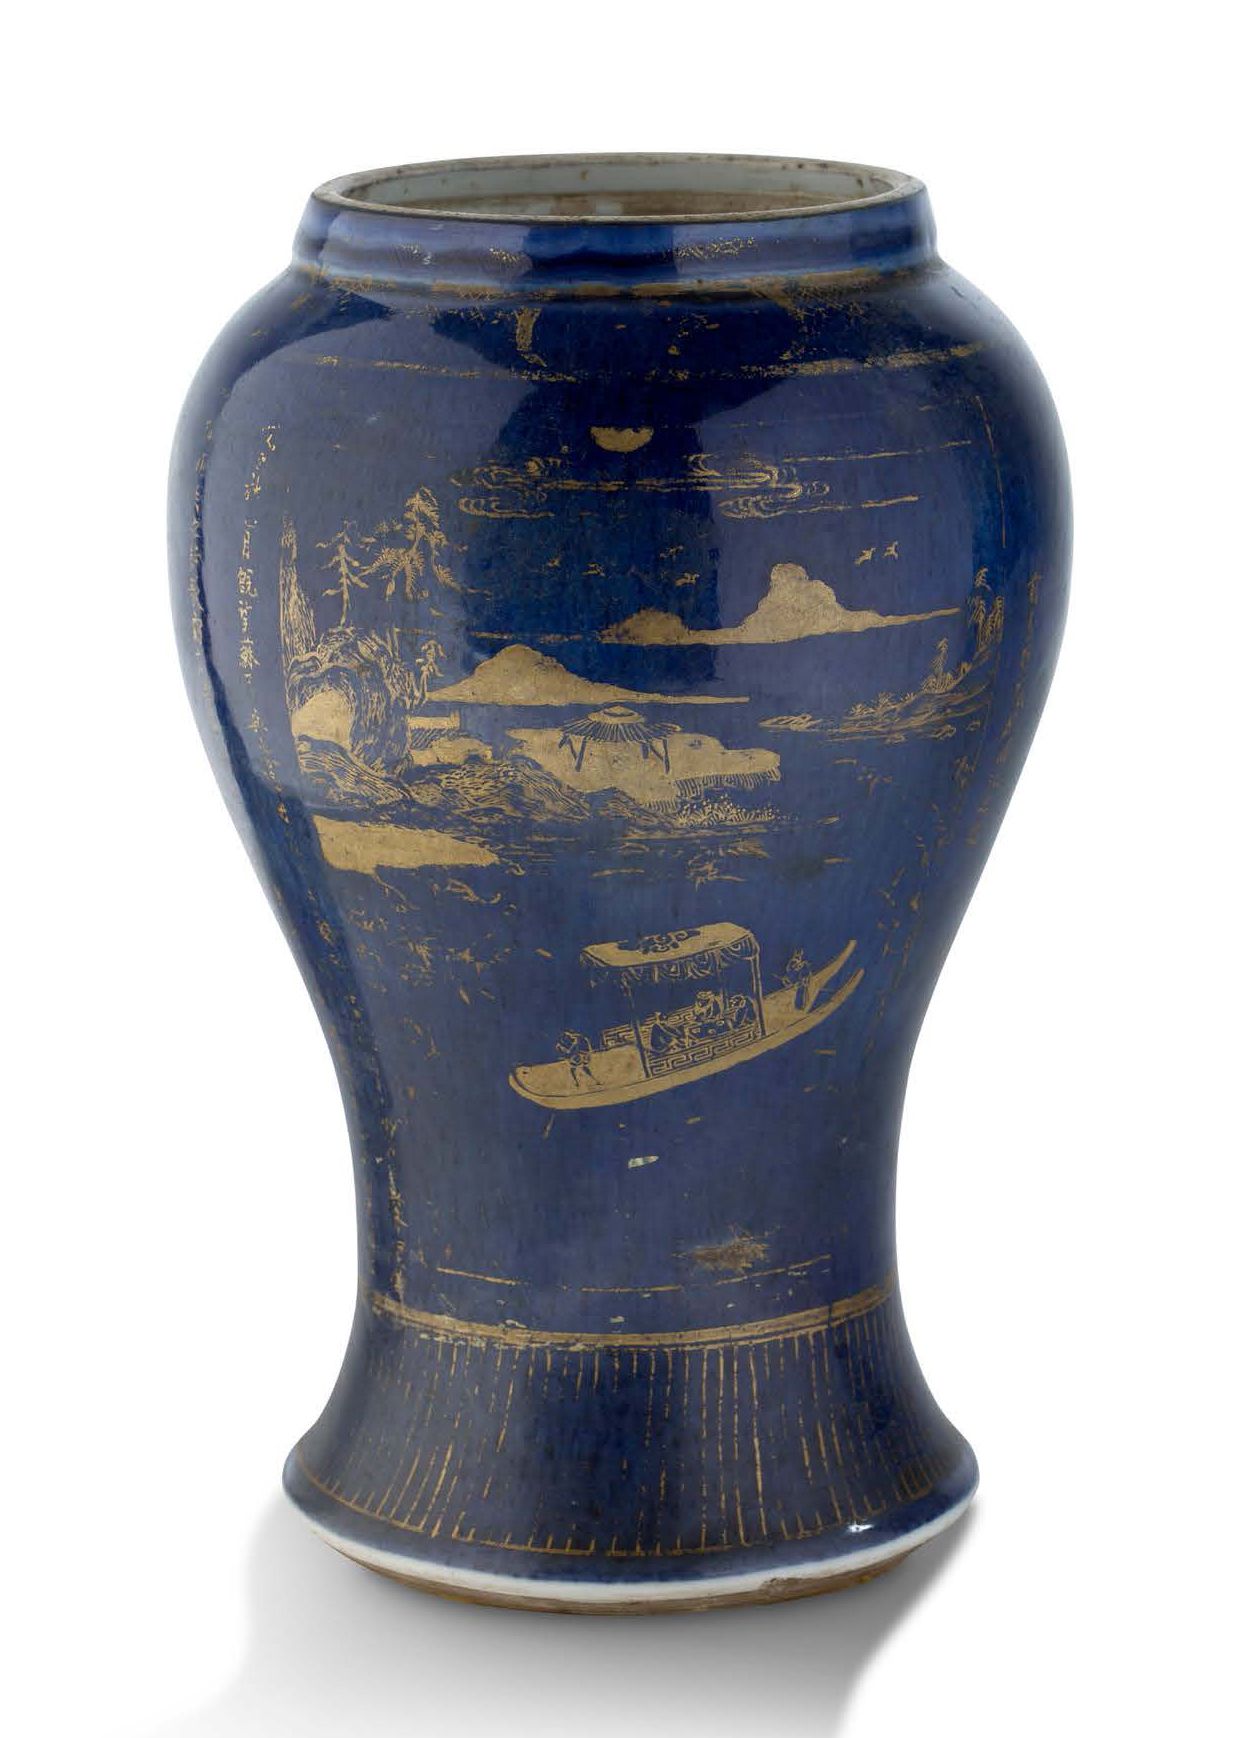 CHINE DYNASTIE QING, PÉRIODE KANGXI (1661 - 1722) 中国 清 康熙年间(1661-1722)
粉蓝色单色瓷瓶